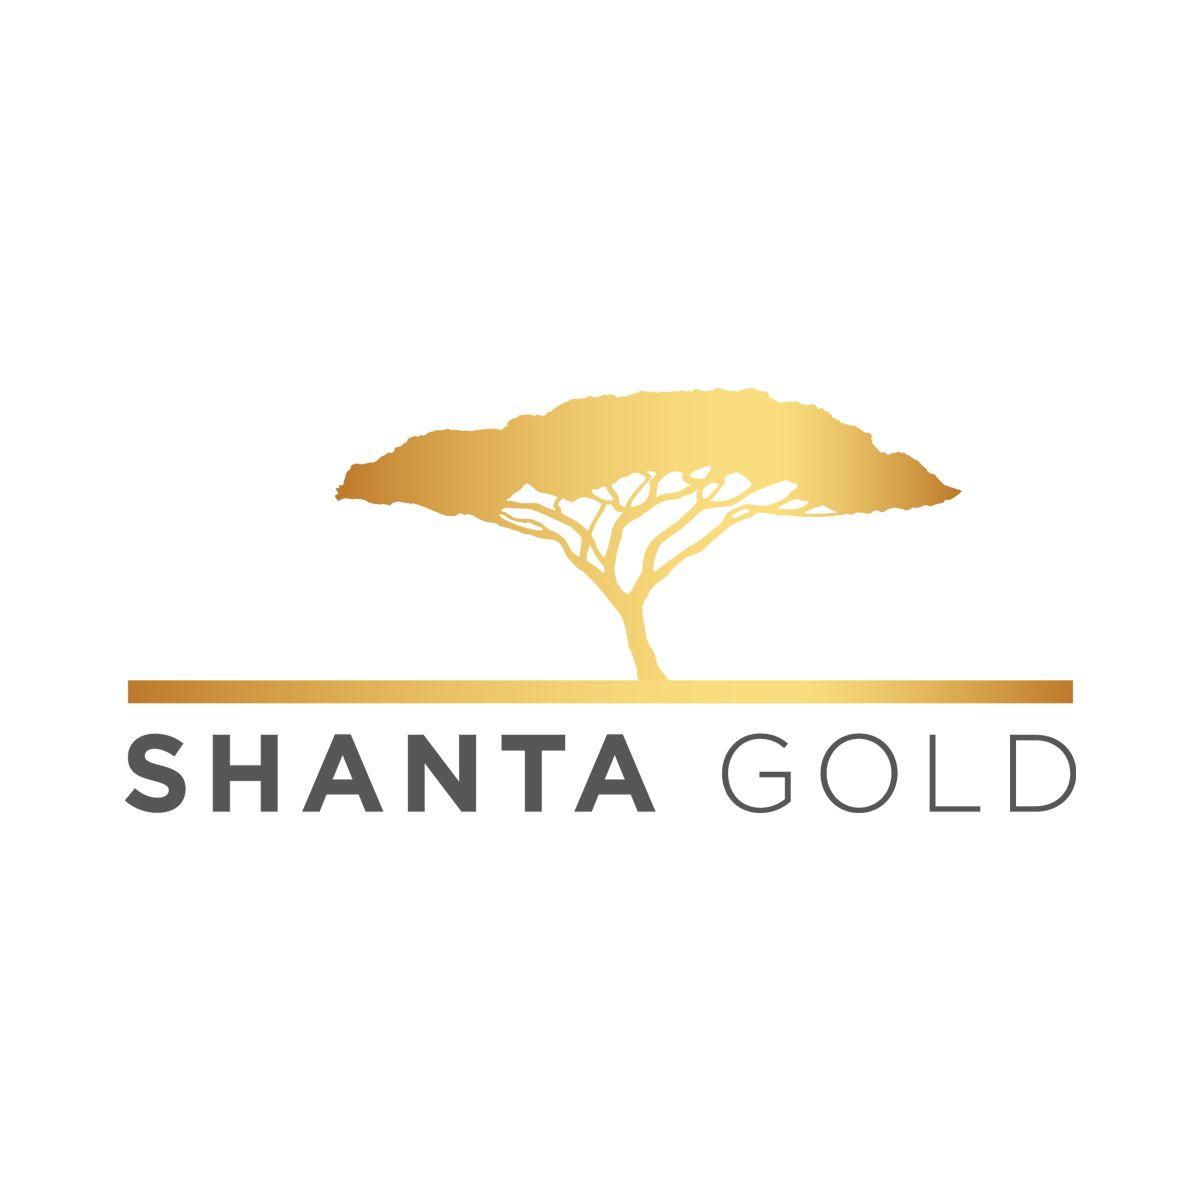 Gold Mining Logo - Shanta Gold